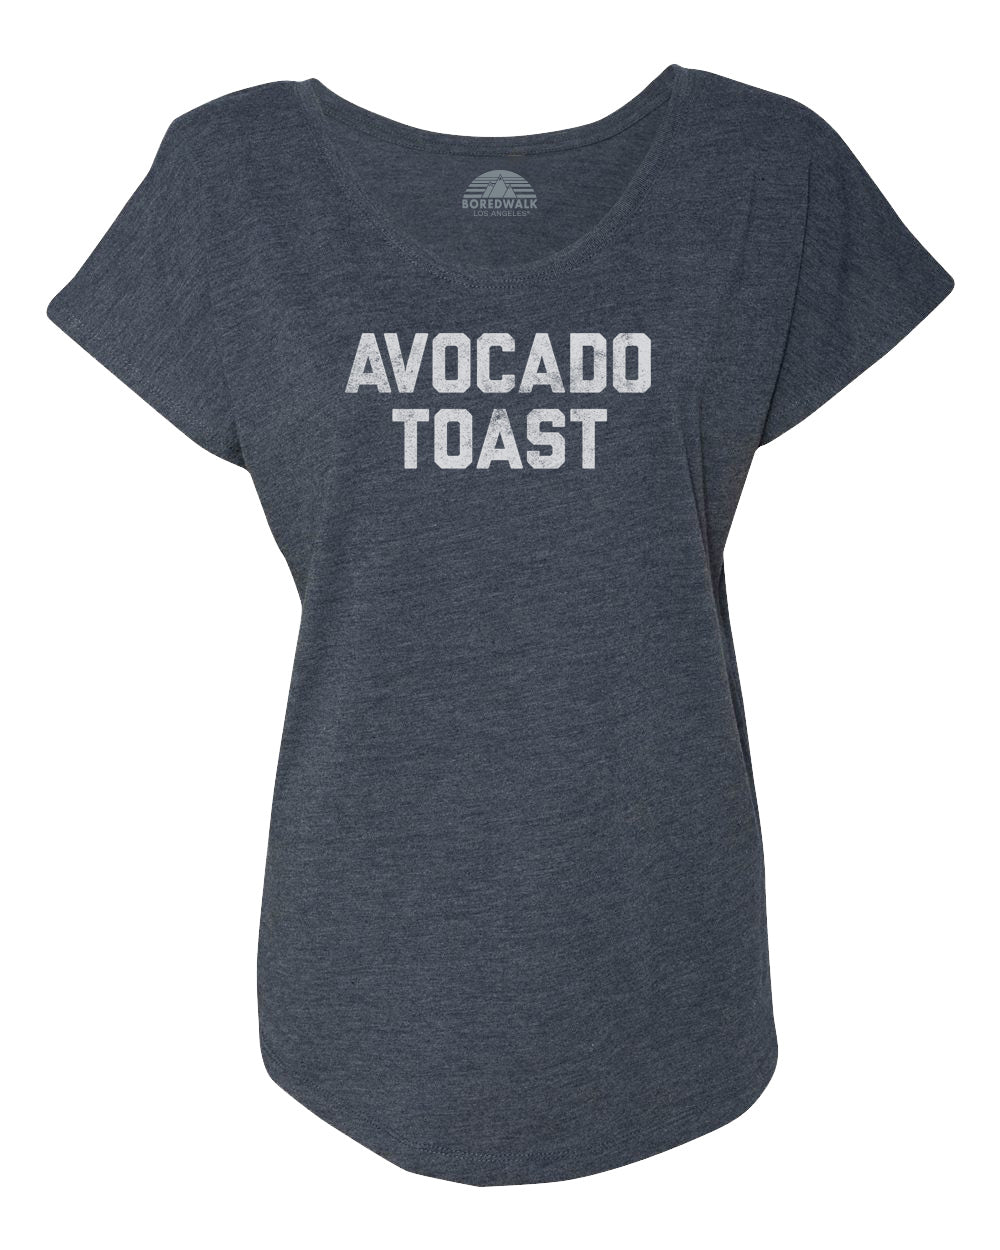 Women's Avocado Toast Scoop Neck T-Shirt